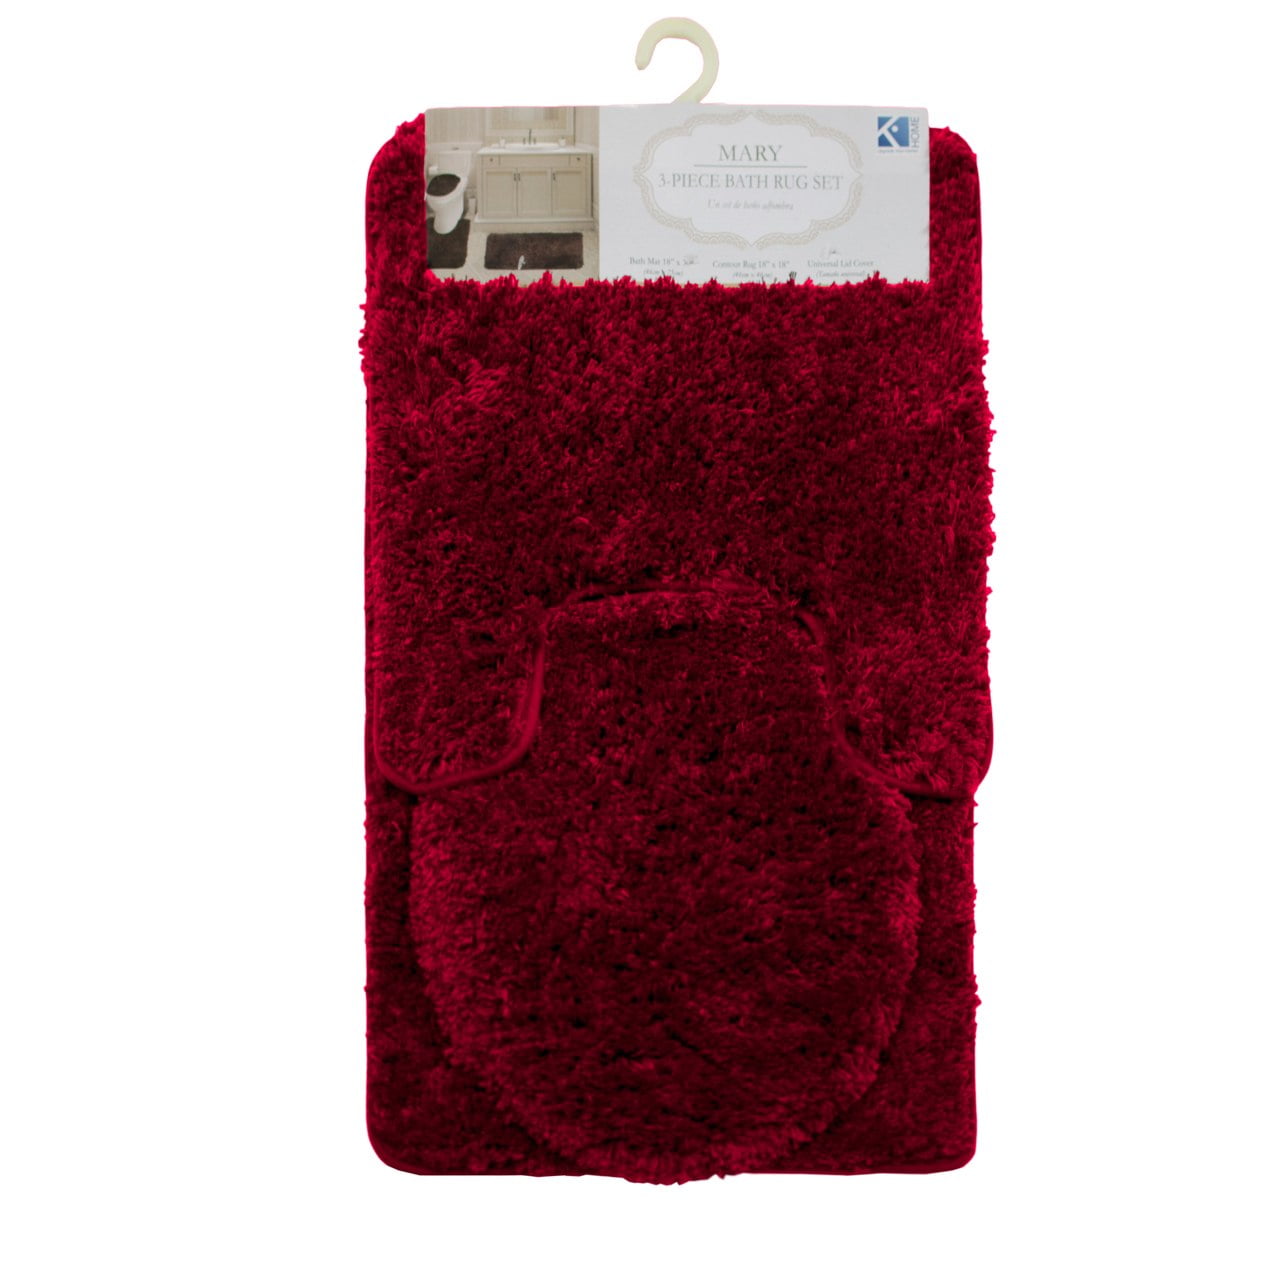 Mary Luxury Soft Plush Shaggy Bath Mat Thick Fluffy Microfiber Bathroom Rug 